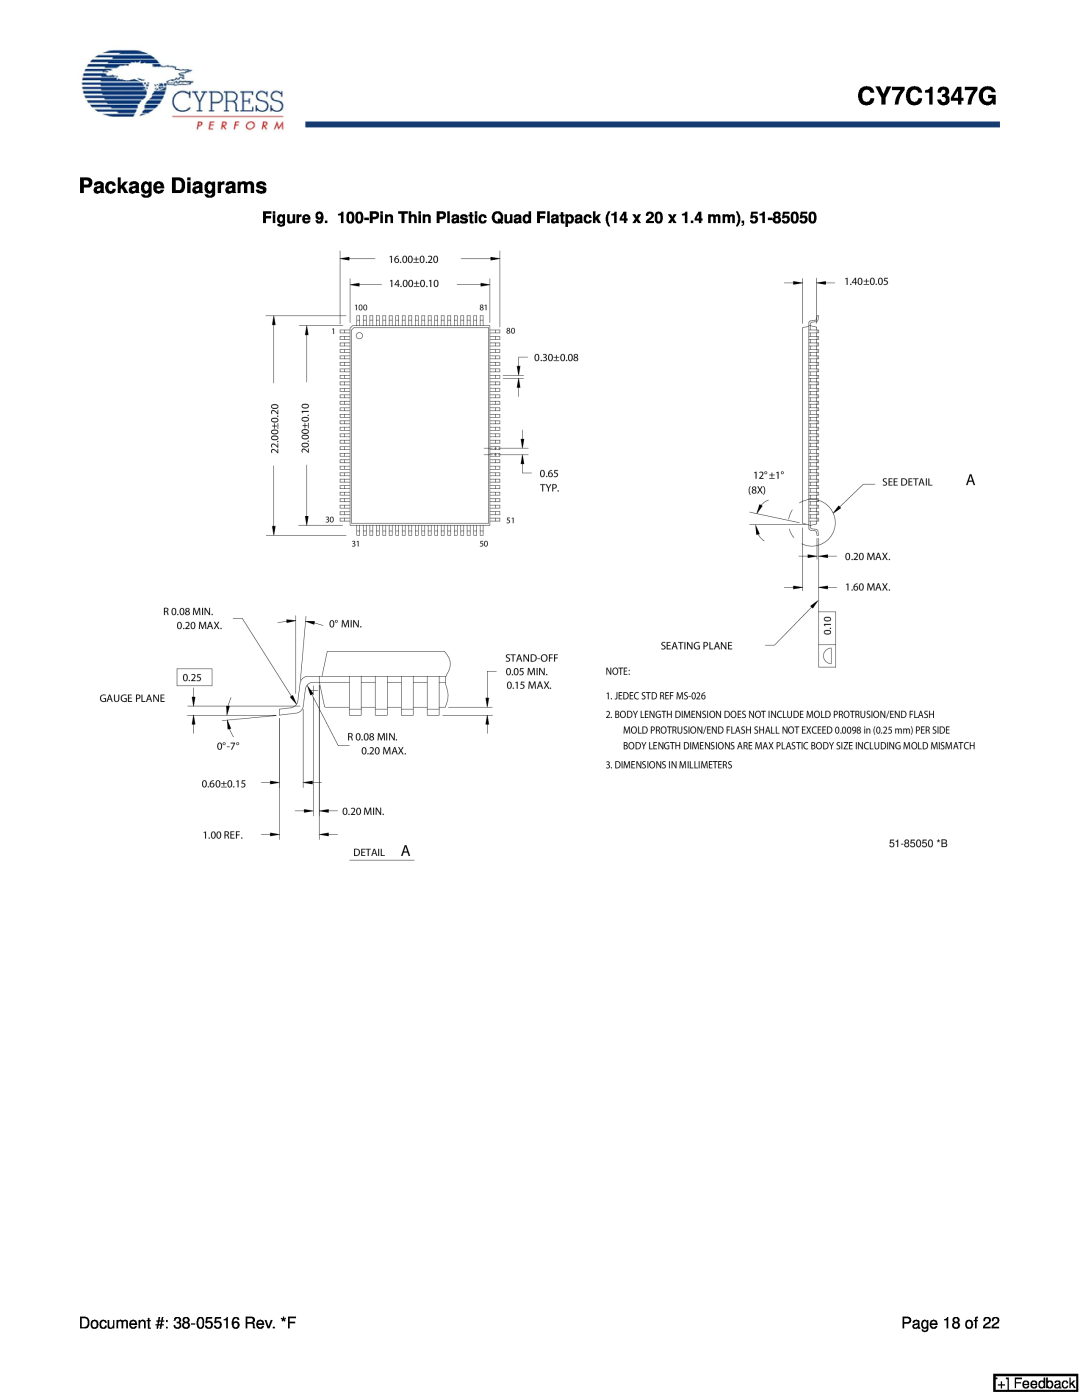 Cypress CY7C1347G manual Package Diagrams, 100-Pin Thin Plastic Quad Flatpack 14 x 20 x 1.4 mm, + Feedback 